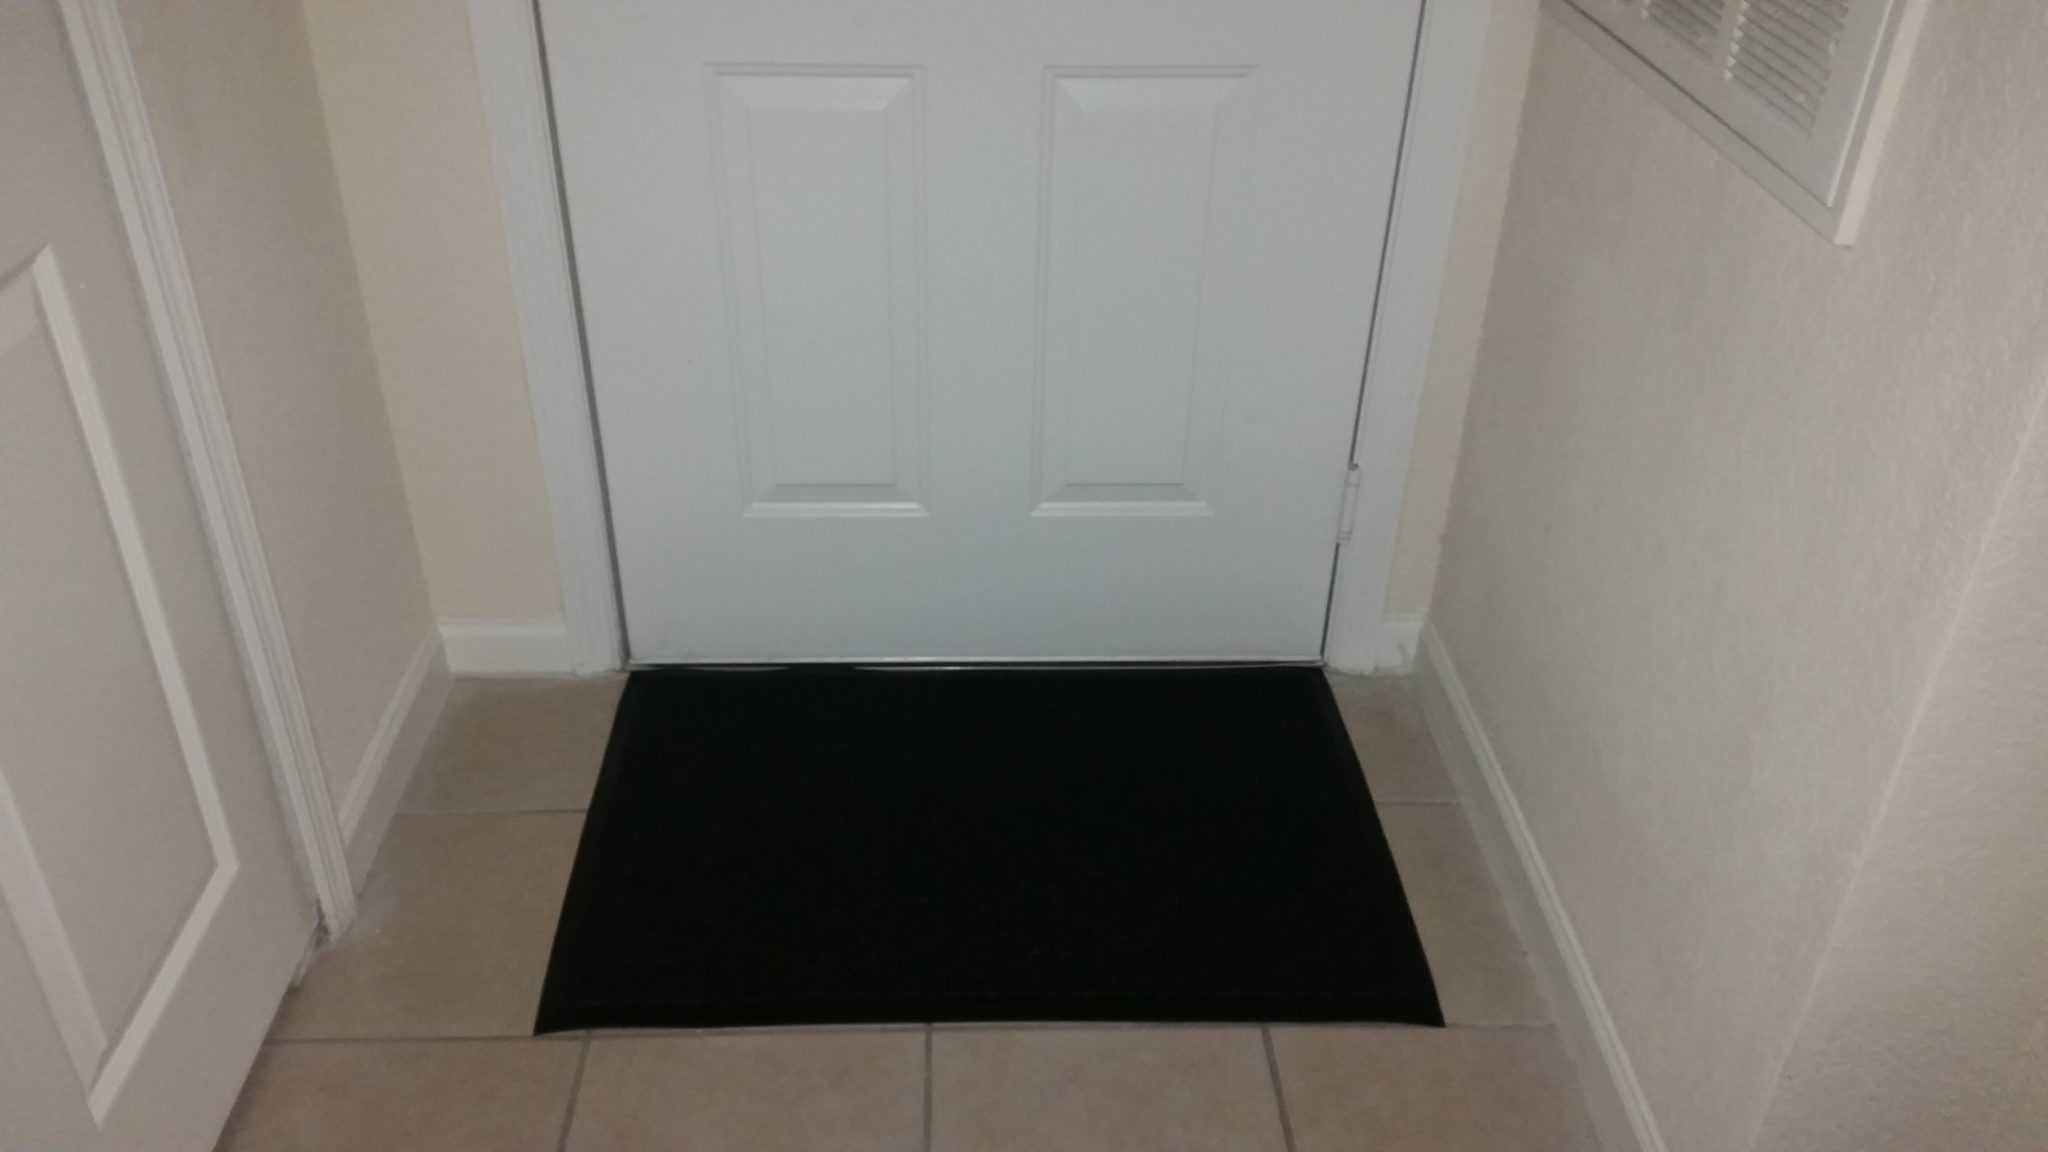 MARBLELIFE® Interior Anti-Wear Floor Mat: 4' x 6